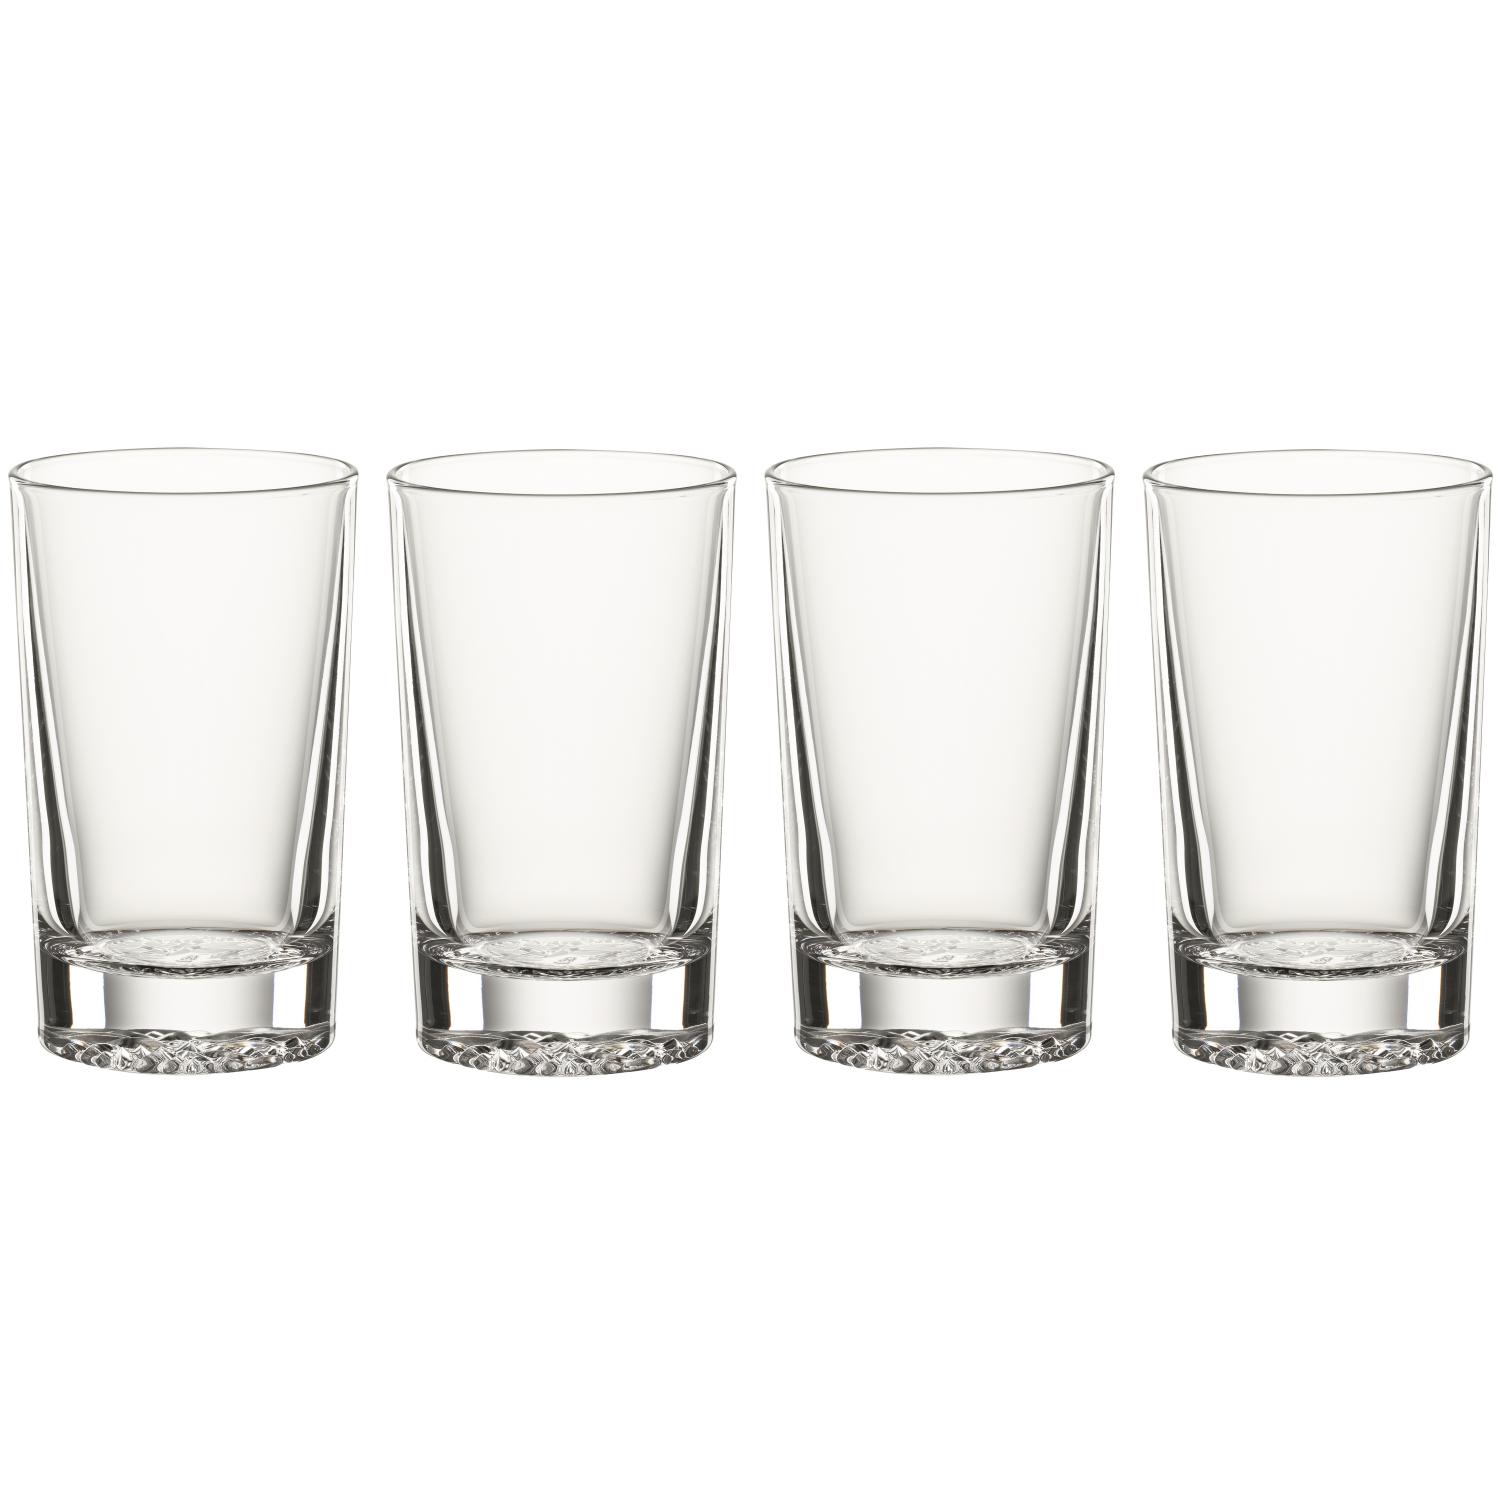 4 стакана для коктейлей Spiegelau Lounge 2.0 Softdrink 247 мл (арт. 2710164)